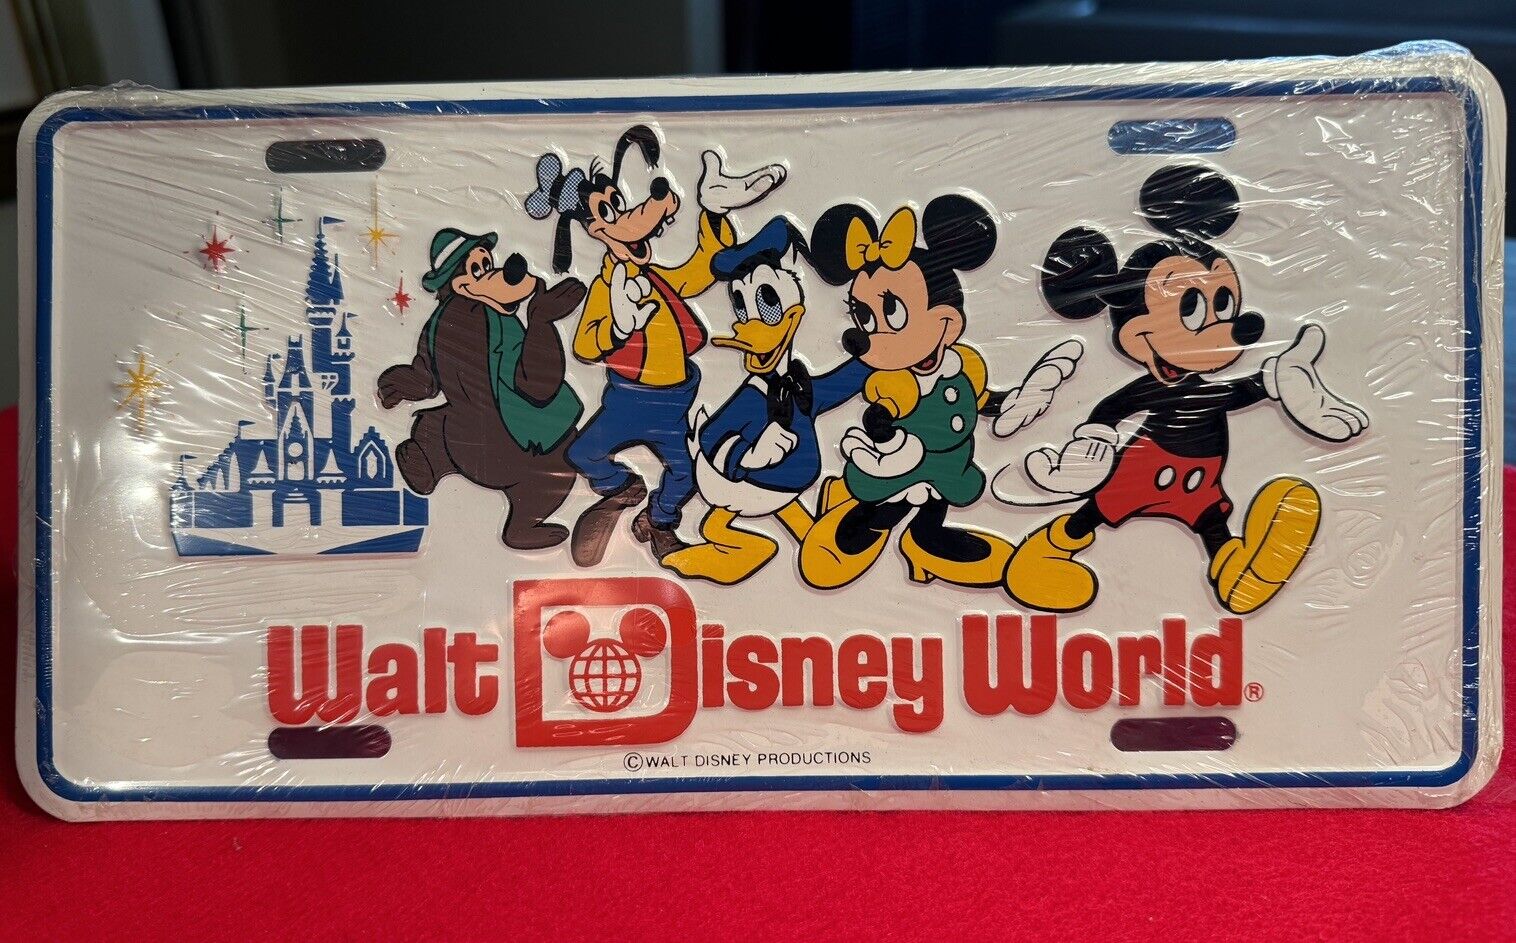 Disney - Walt Disney World Vintage License Plate Featuring Characters